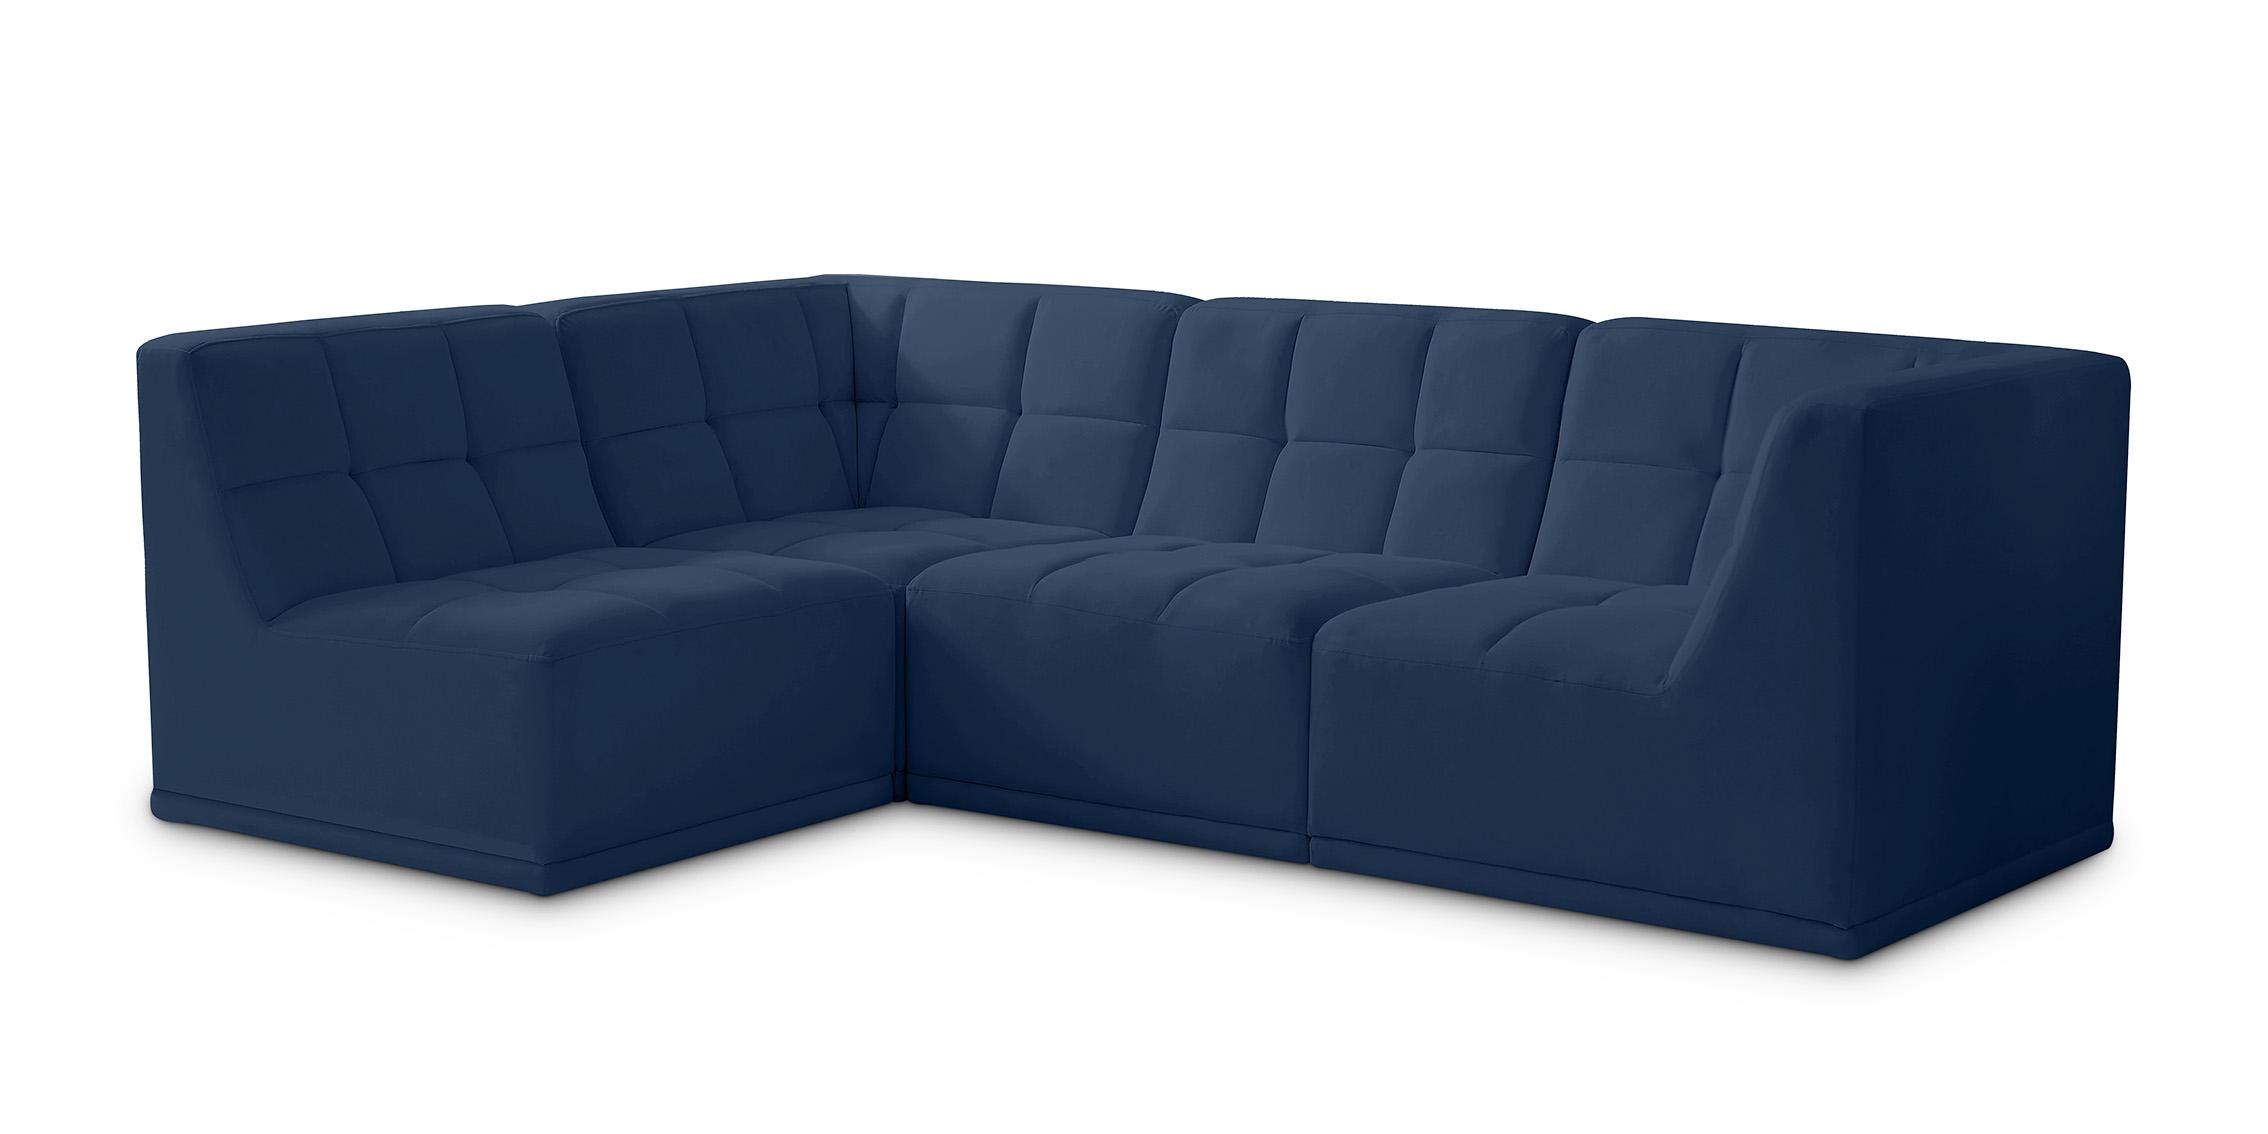 

    
Meridian Furniture RELAX 650Navy-Sec4A Modular Sectional Navy 650Navy-Sec4A
